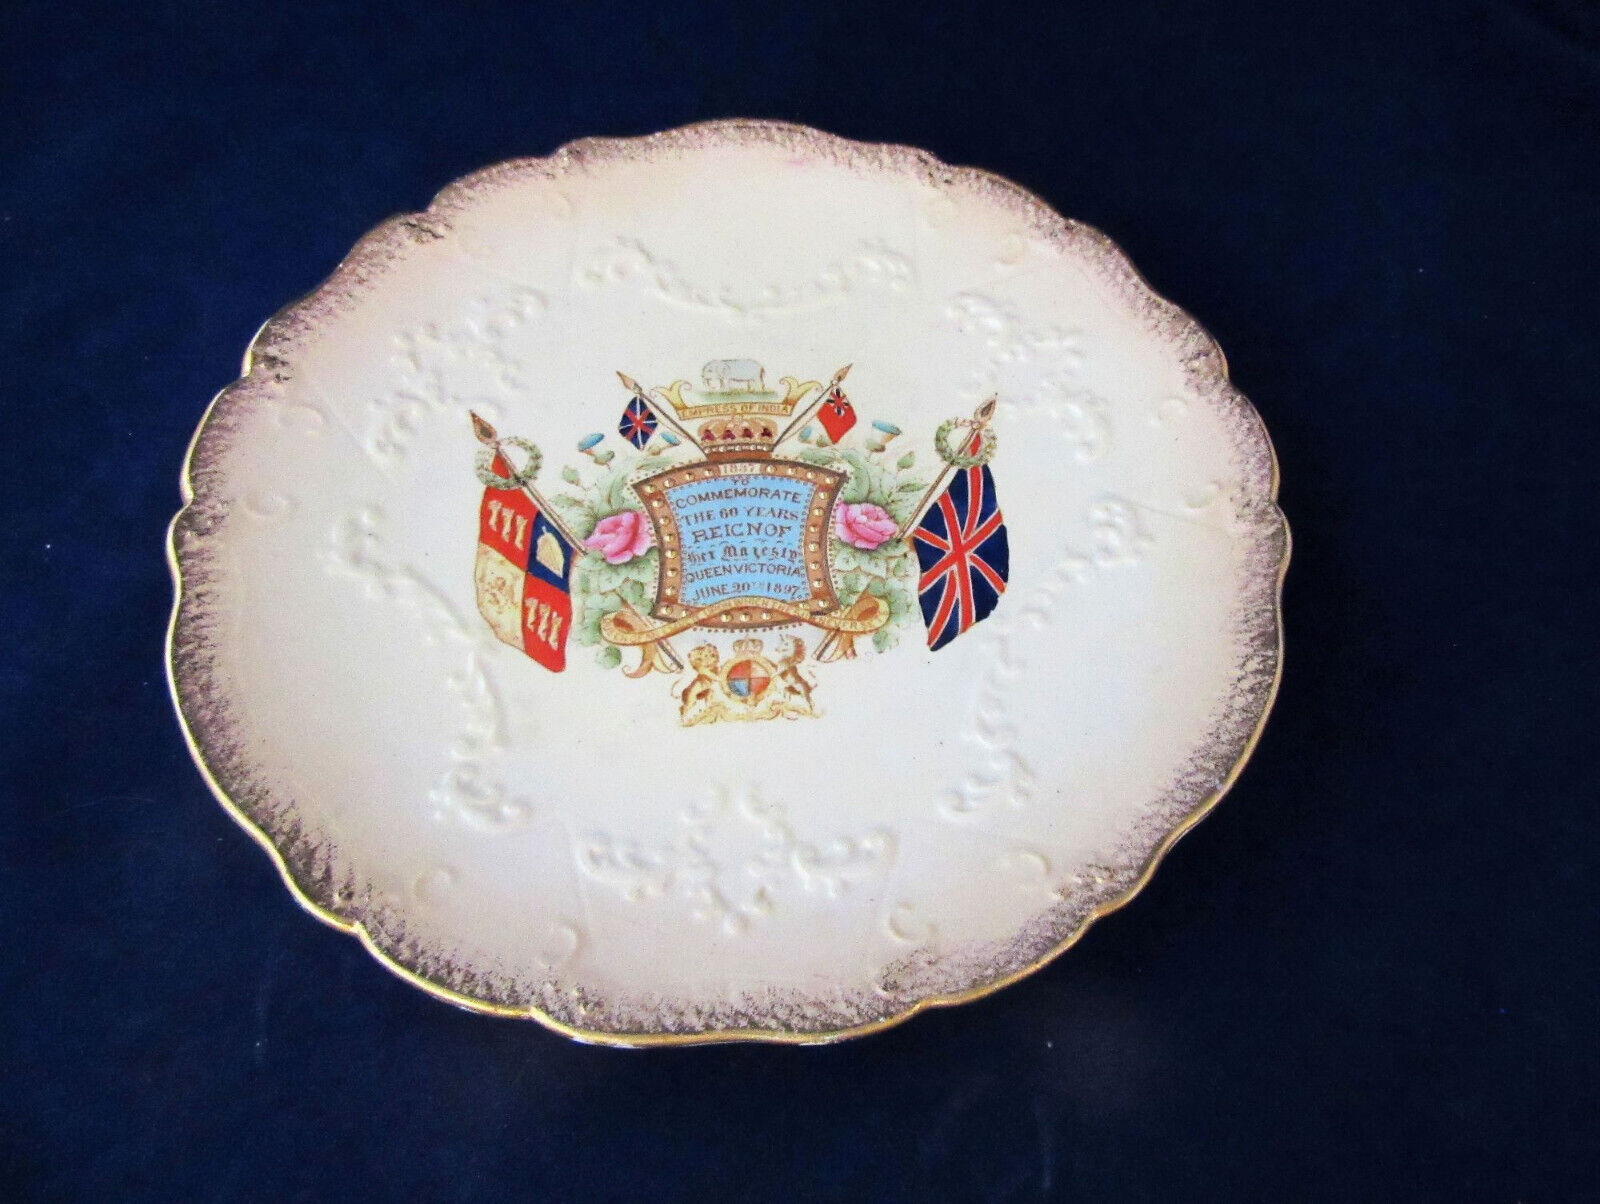 RARE, Antique Plate, Queen Victoria\'s Diamond Jubilee, 1897 by William Lowe